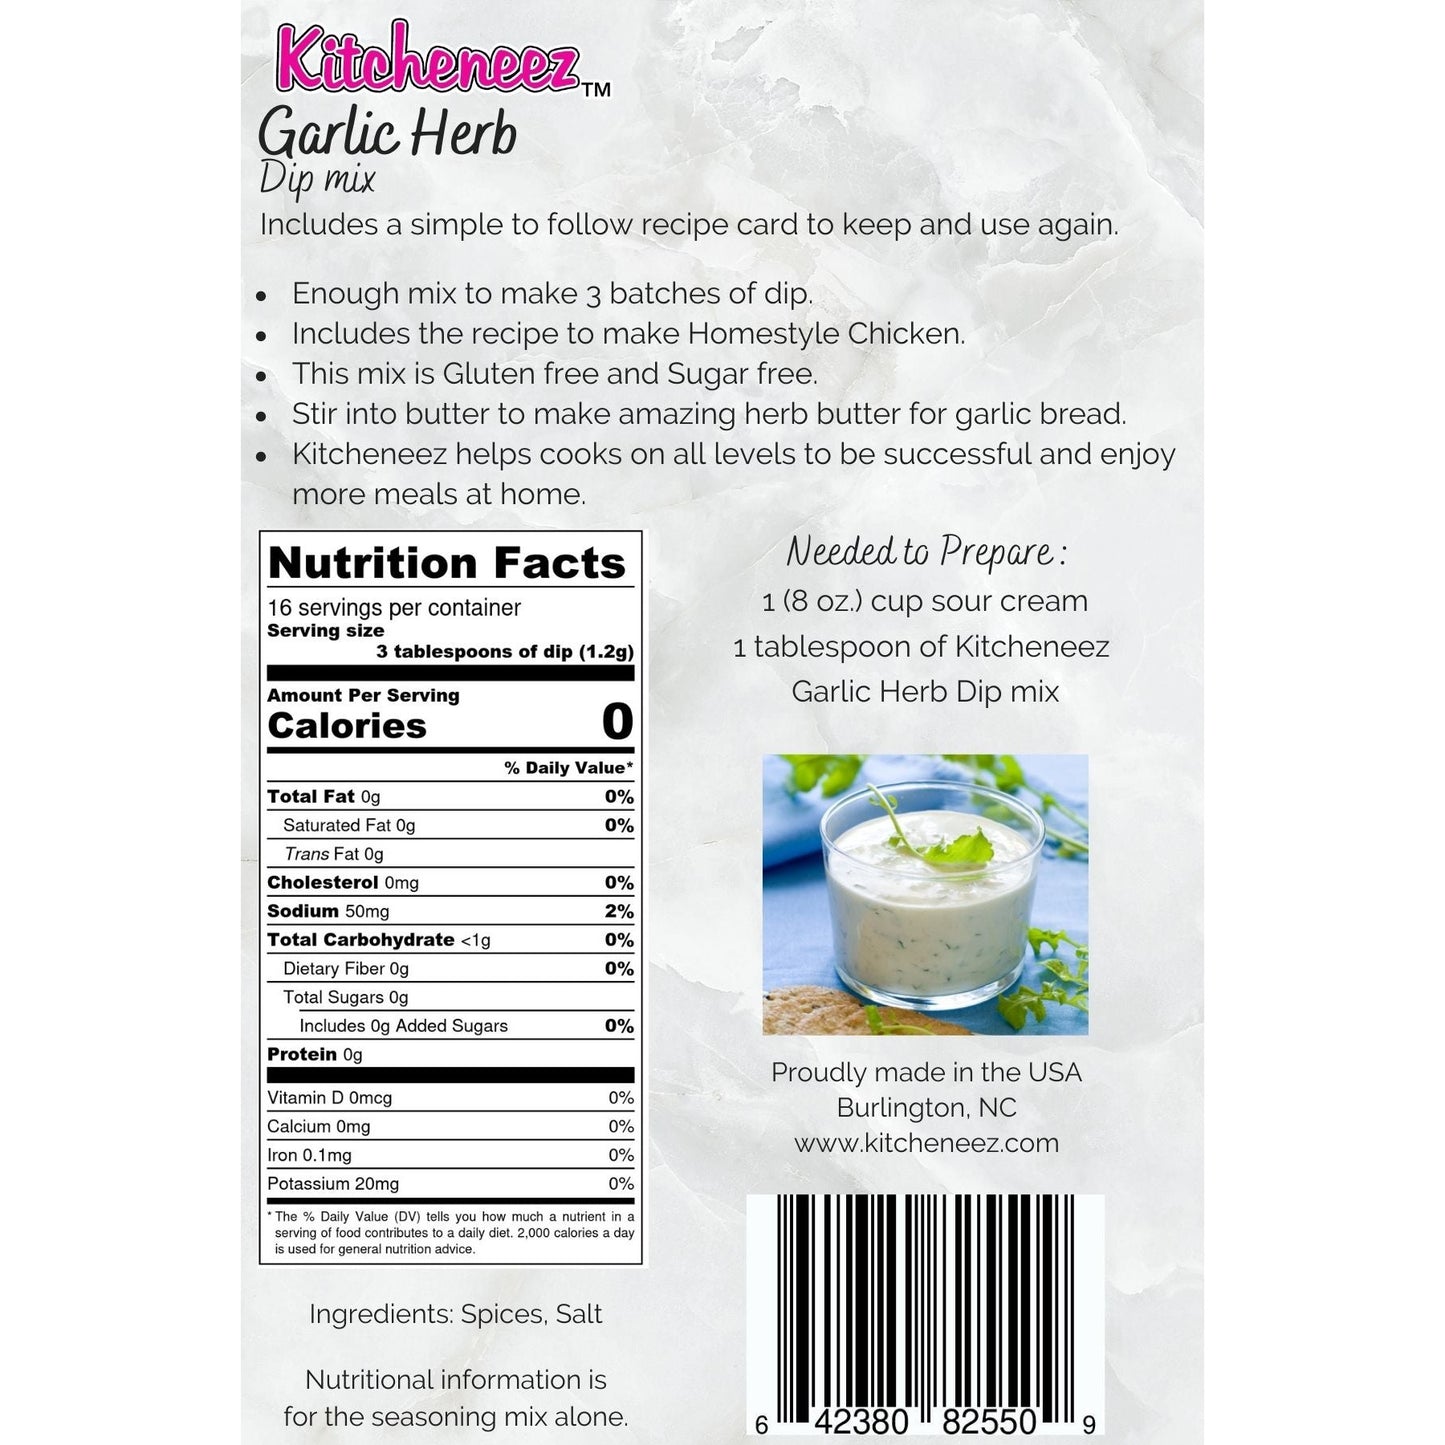 Buy a Garlic Herb dip mix at regular price and pick unlimited dip mixes at discount!